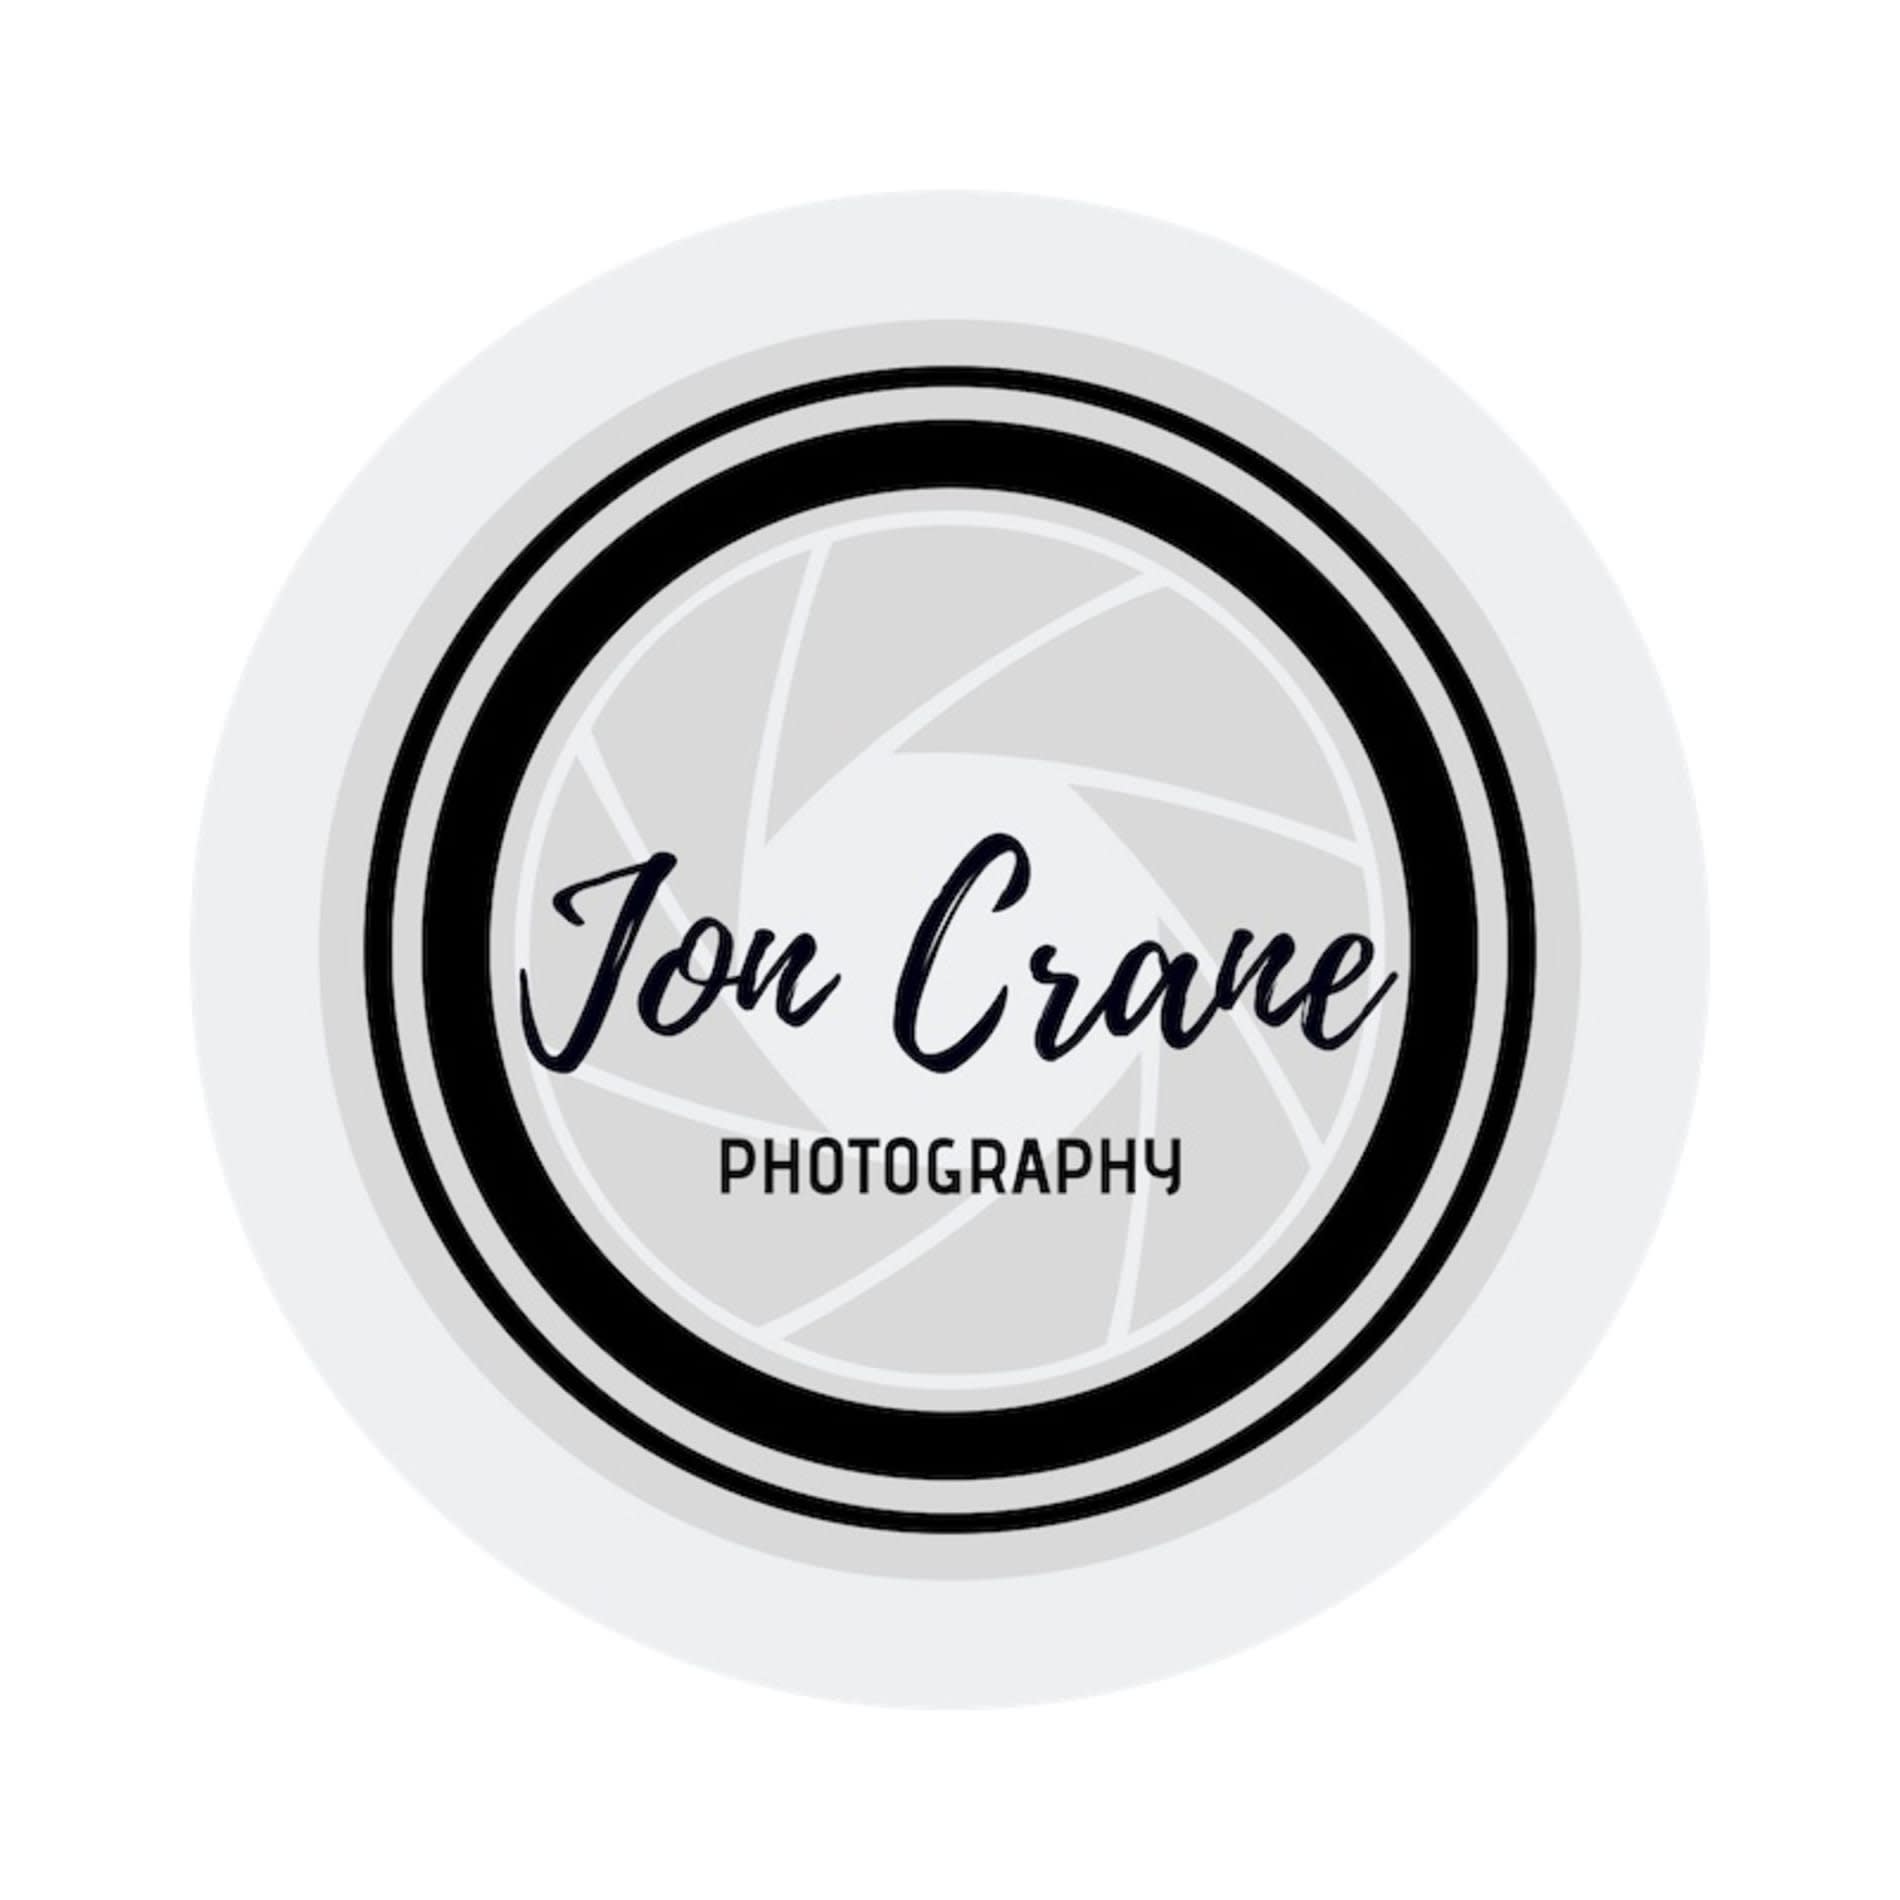 Jon Crane Photography